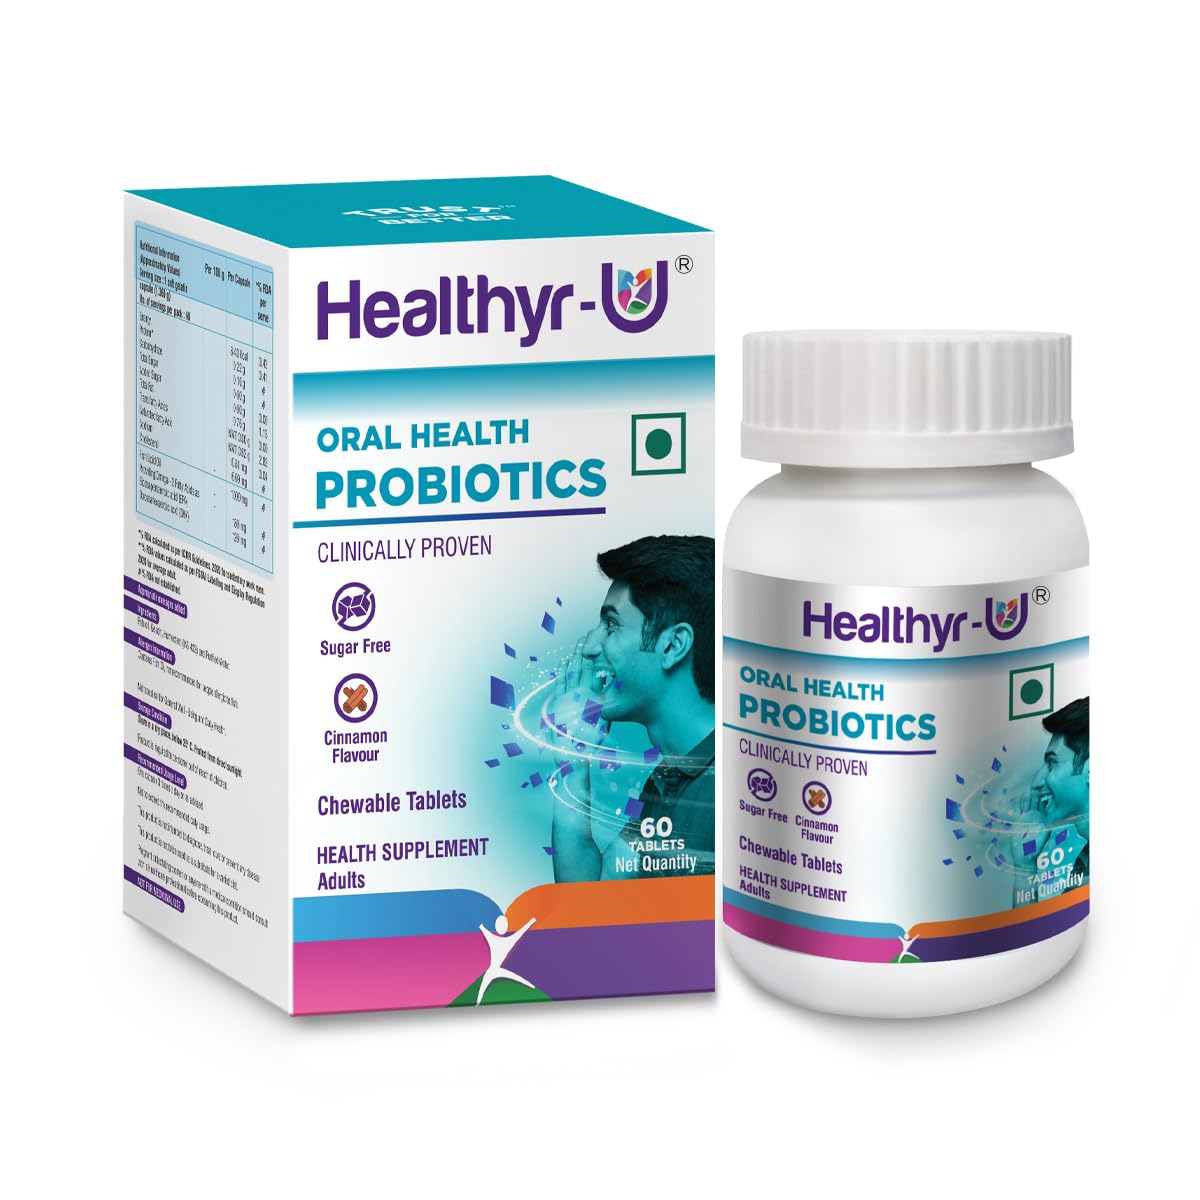 Buy Healthyr-U Oral Health Probiotic, 60 Chewable Tablets Online